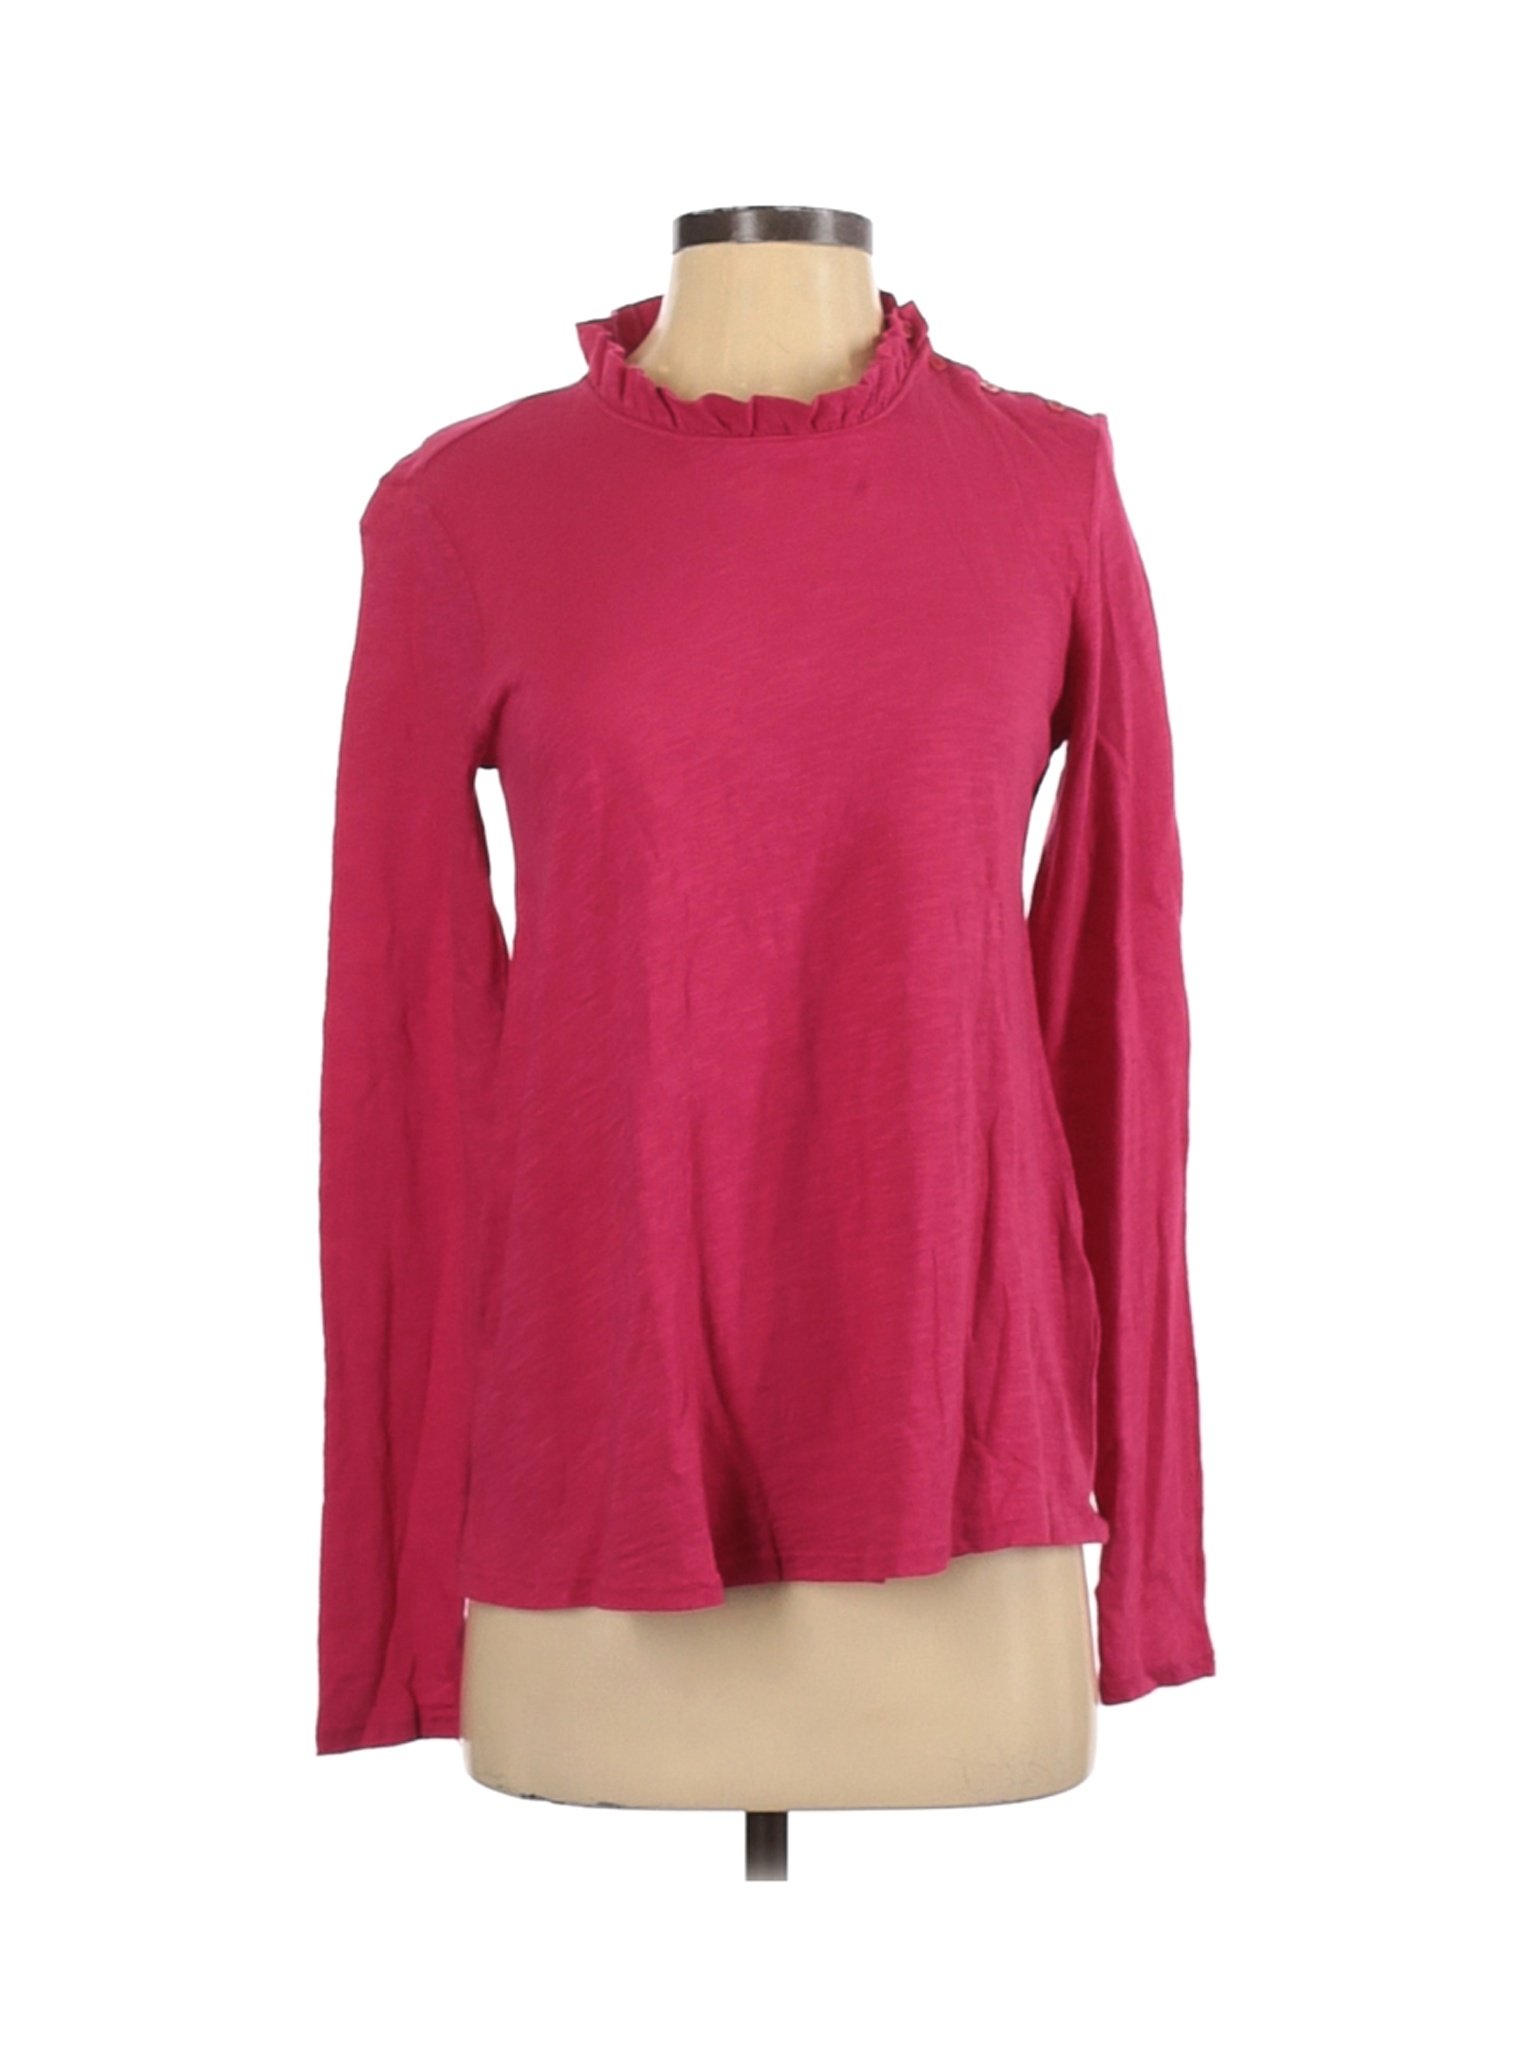 NWT Stateside Women Pink Long Sleeve T-Shirt S | eBay